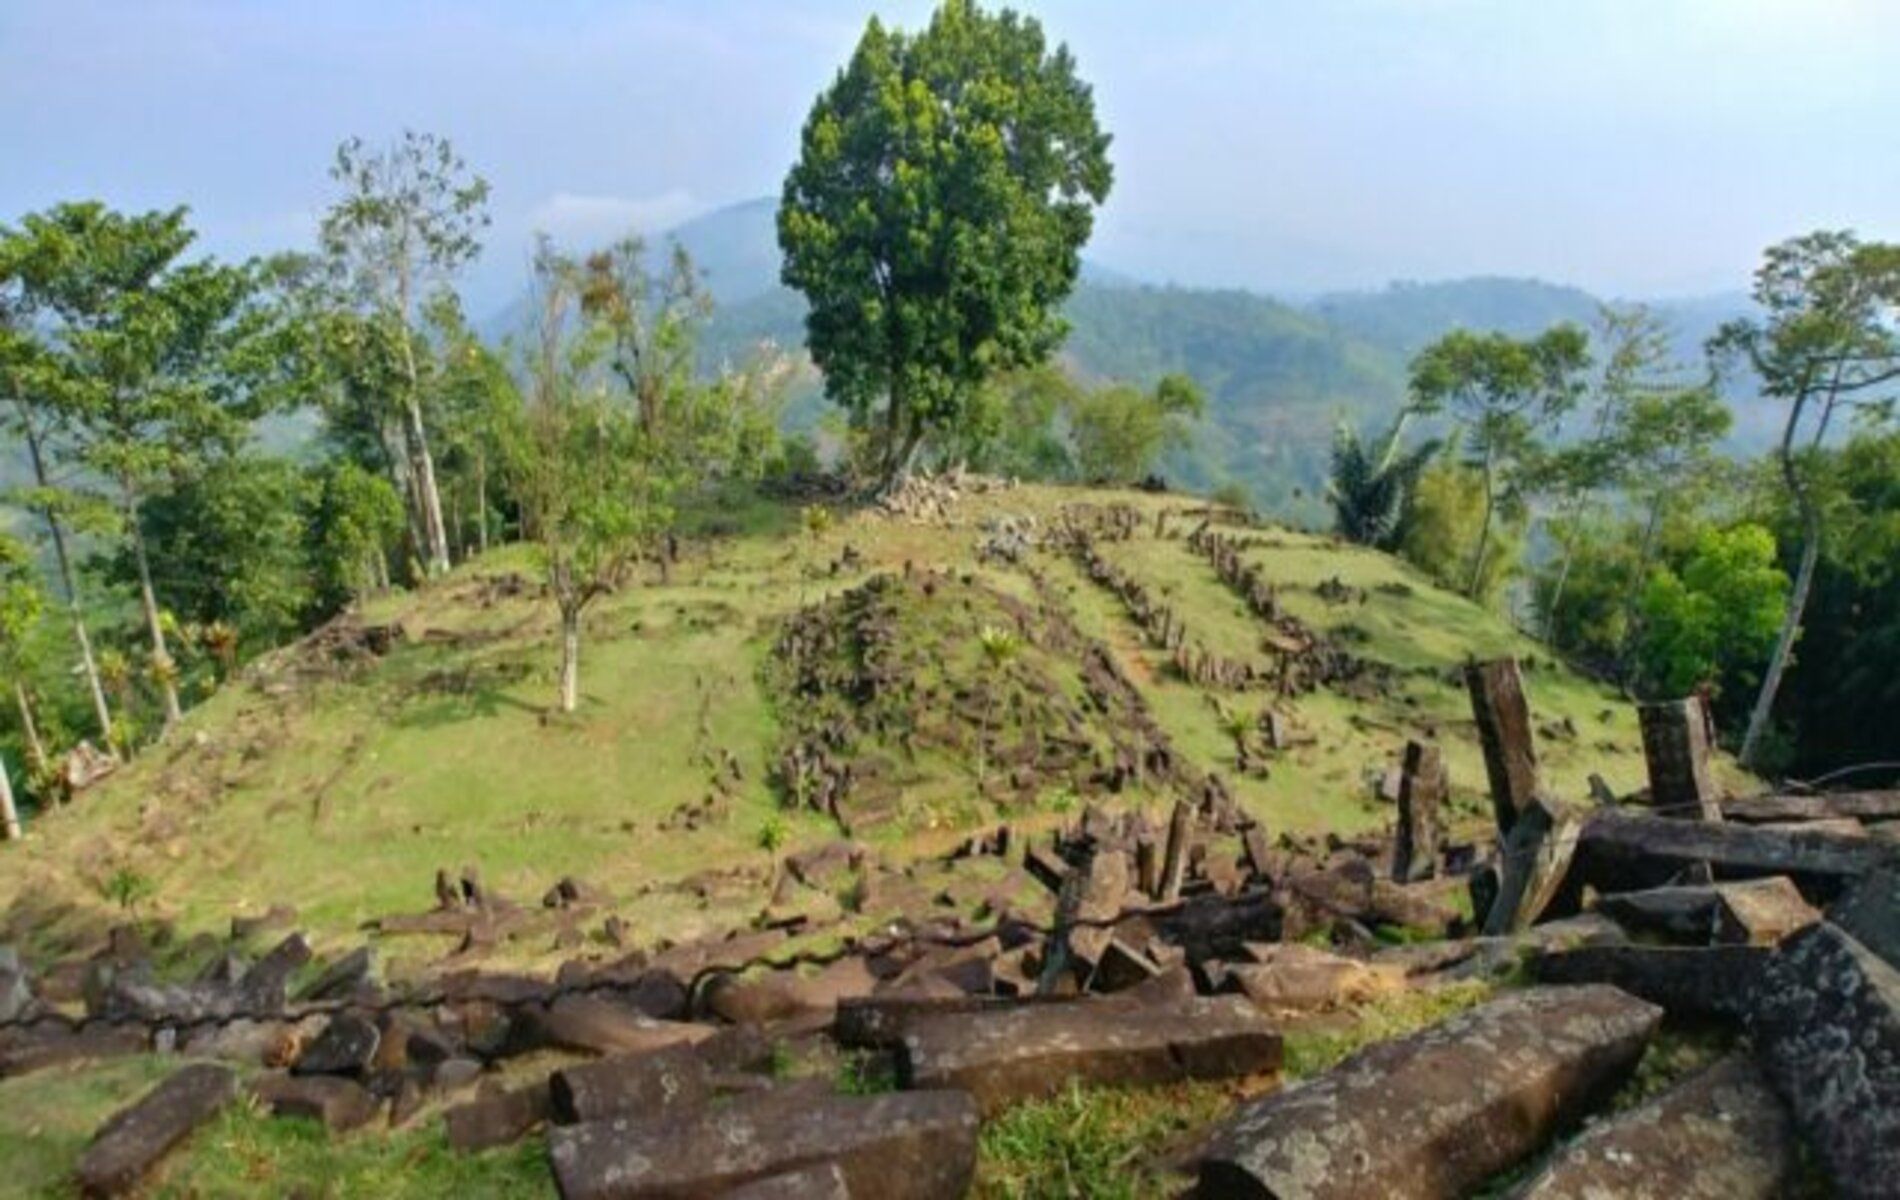 Situs Gunung Padang hingga kini masih menyisakan misteri seperti dugaan ada piramida tertimbun di dalam gunung.